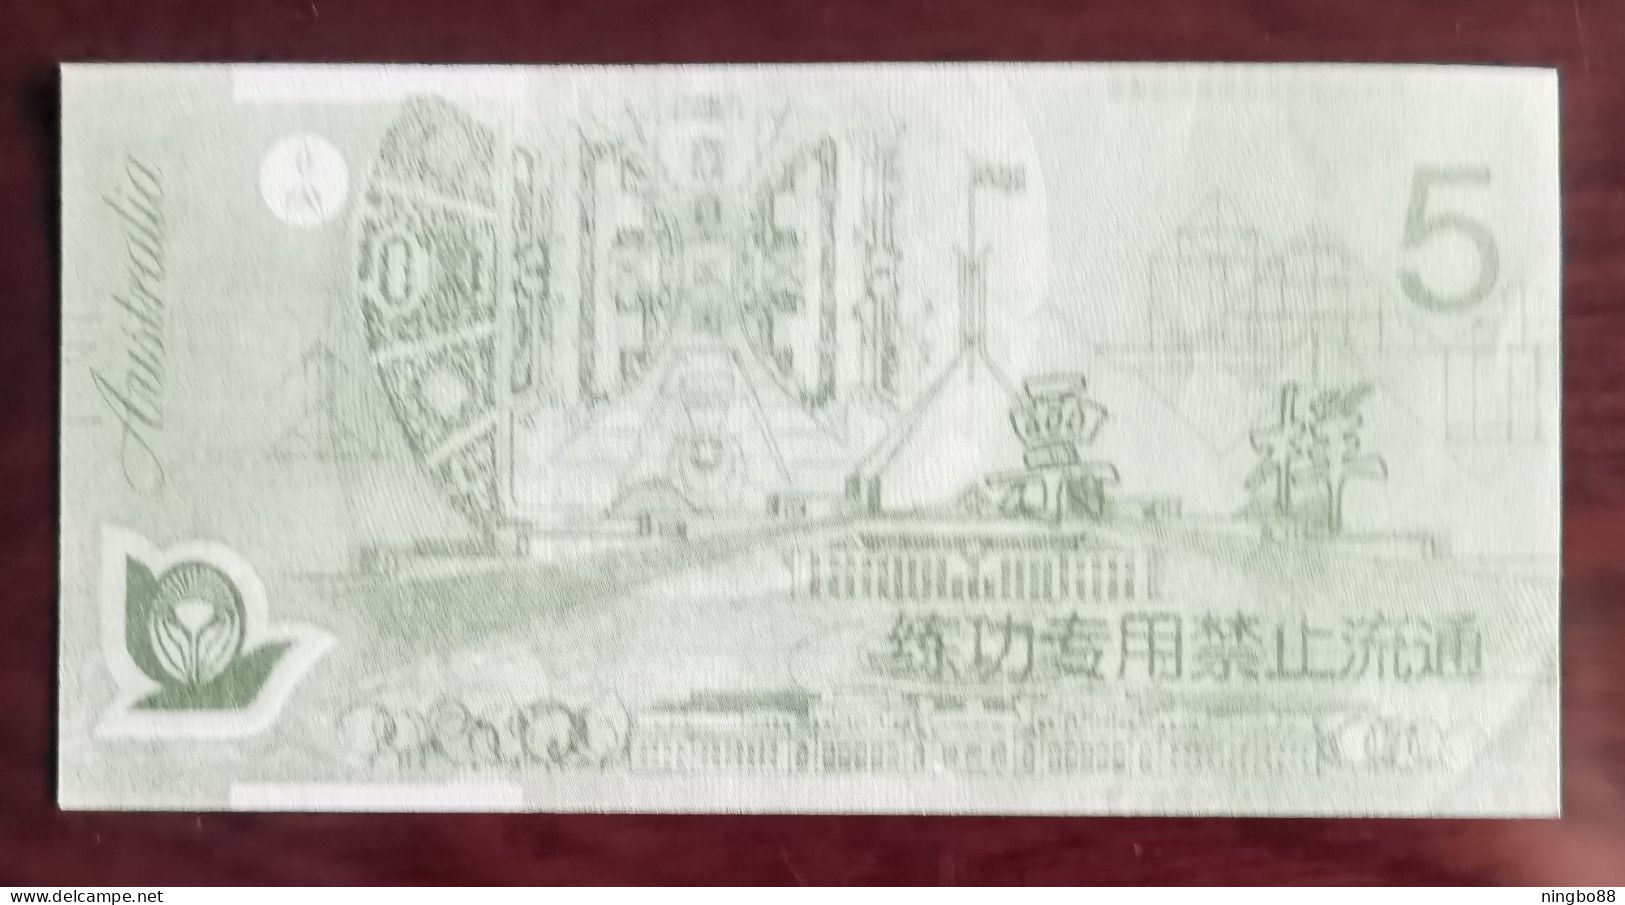 China BOC Bank (bank Of China) Training/test Banknote,AUSTRALIA B-2 Series 5 Dollars Note Specimen Overprint - Ficticios & Especimenes